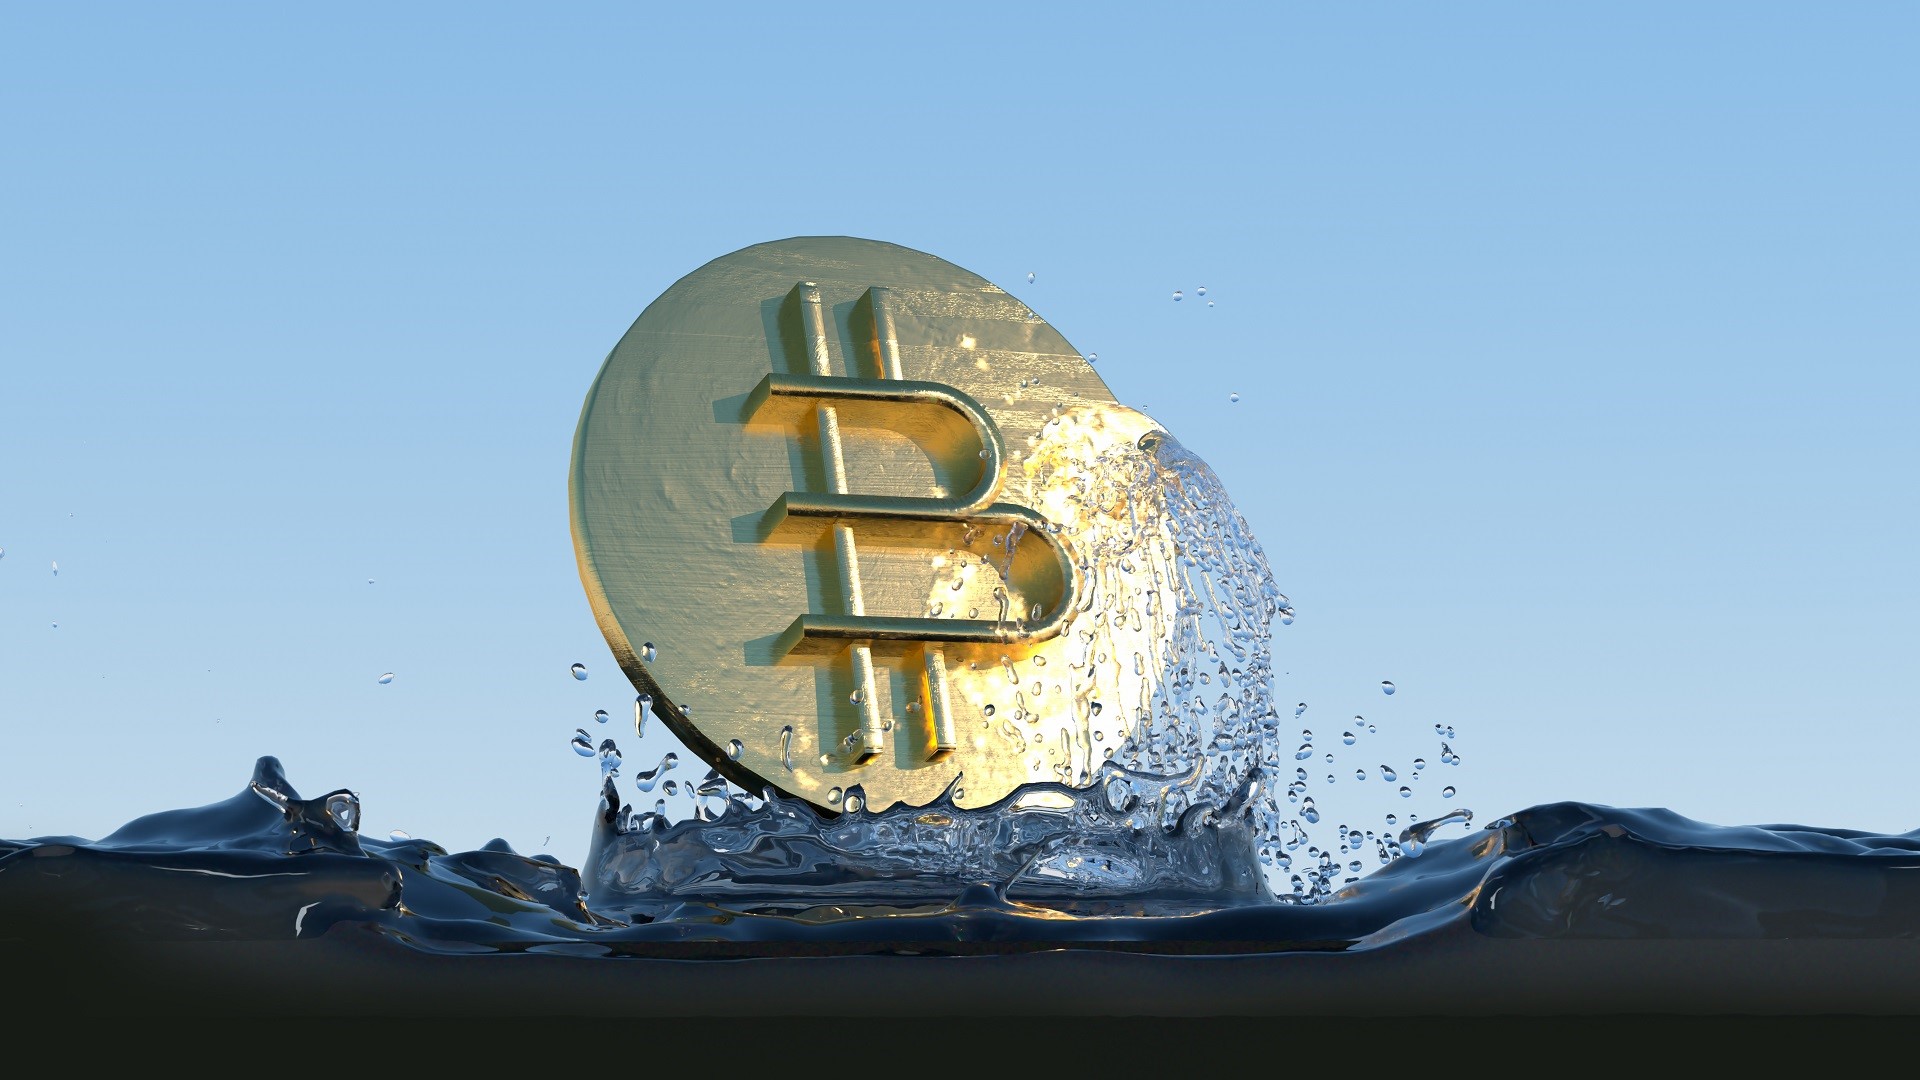 money expert graham stephen weighs in: will bitcoin make you poor?